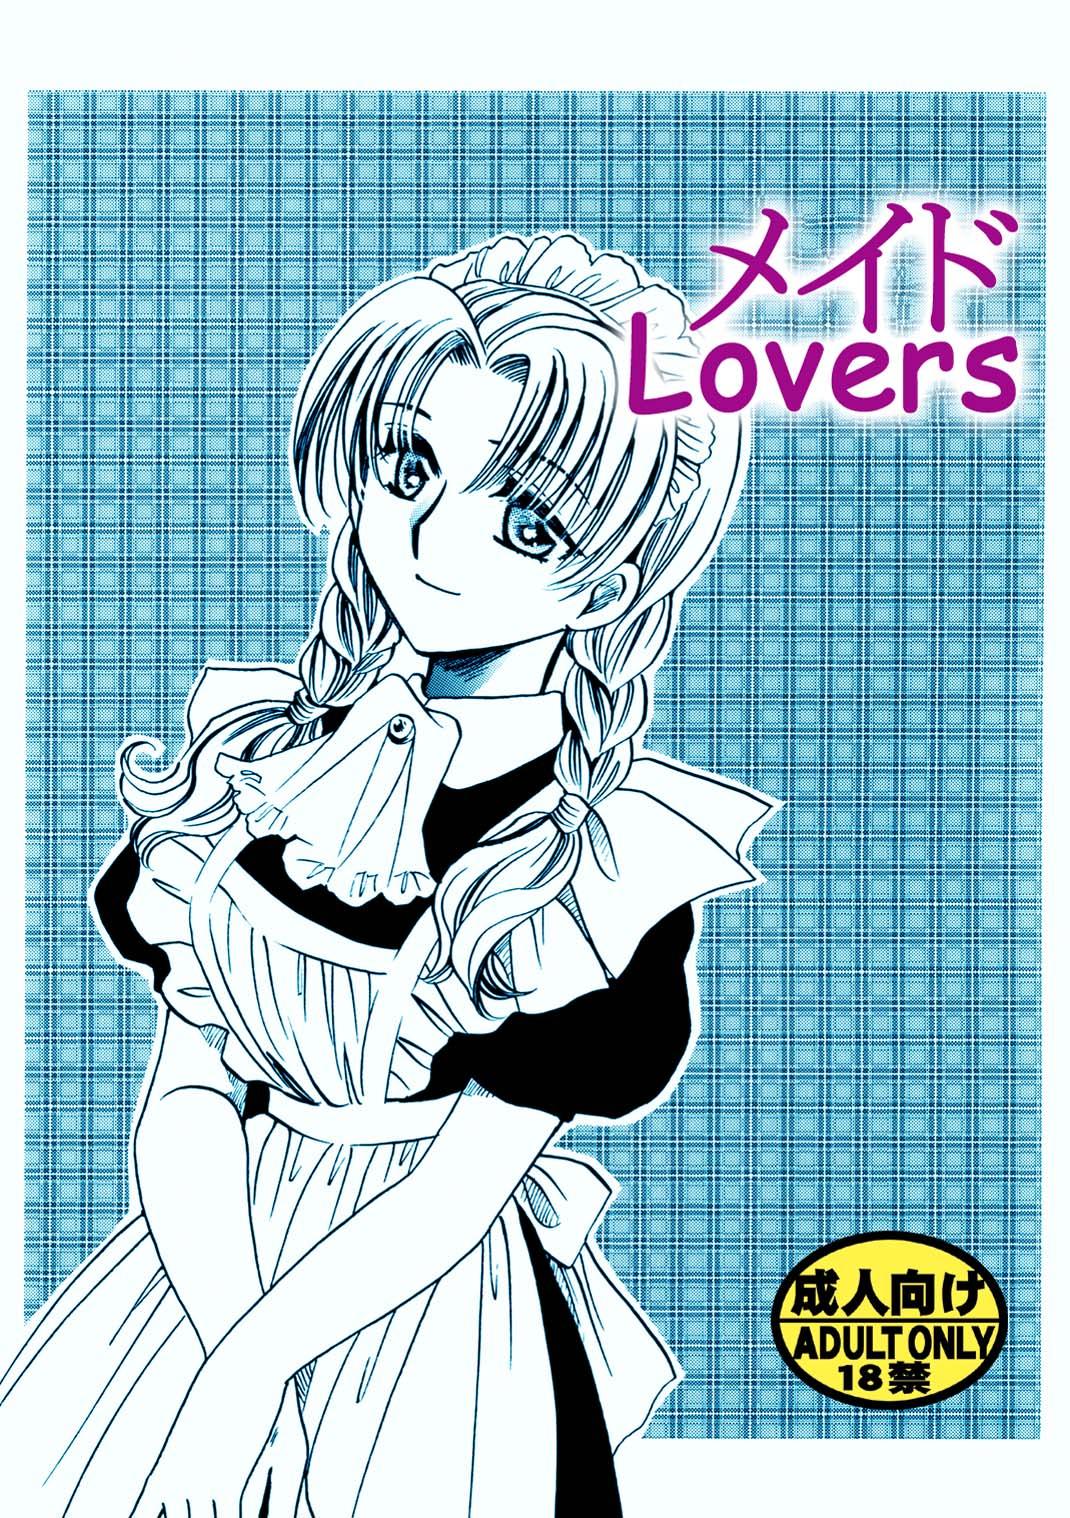 Maid Lovers 0